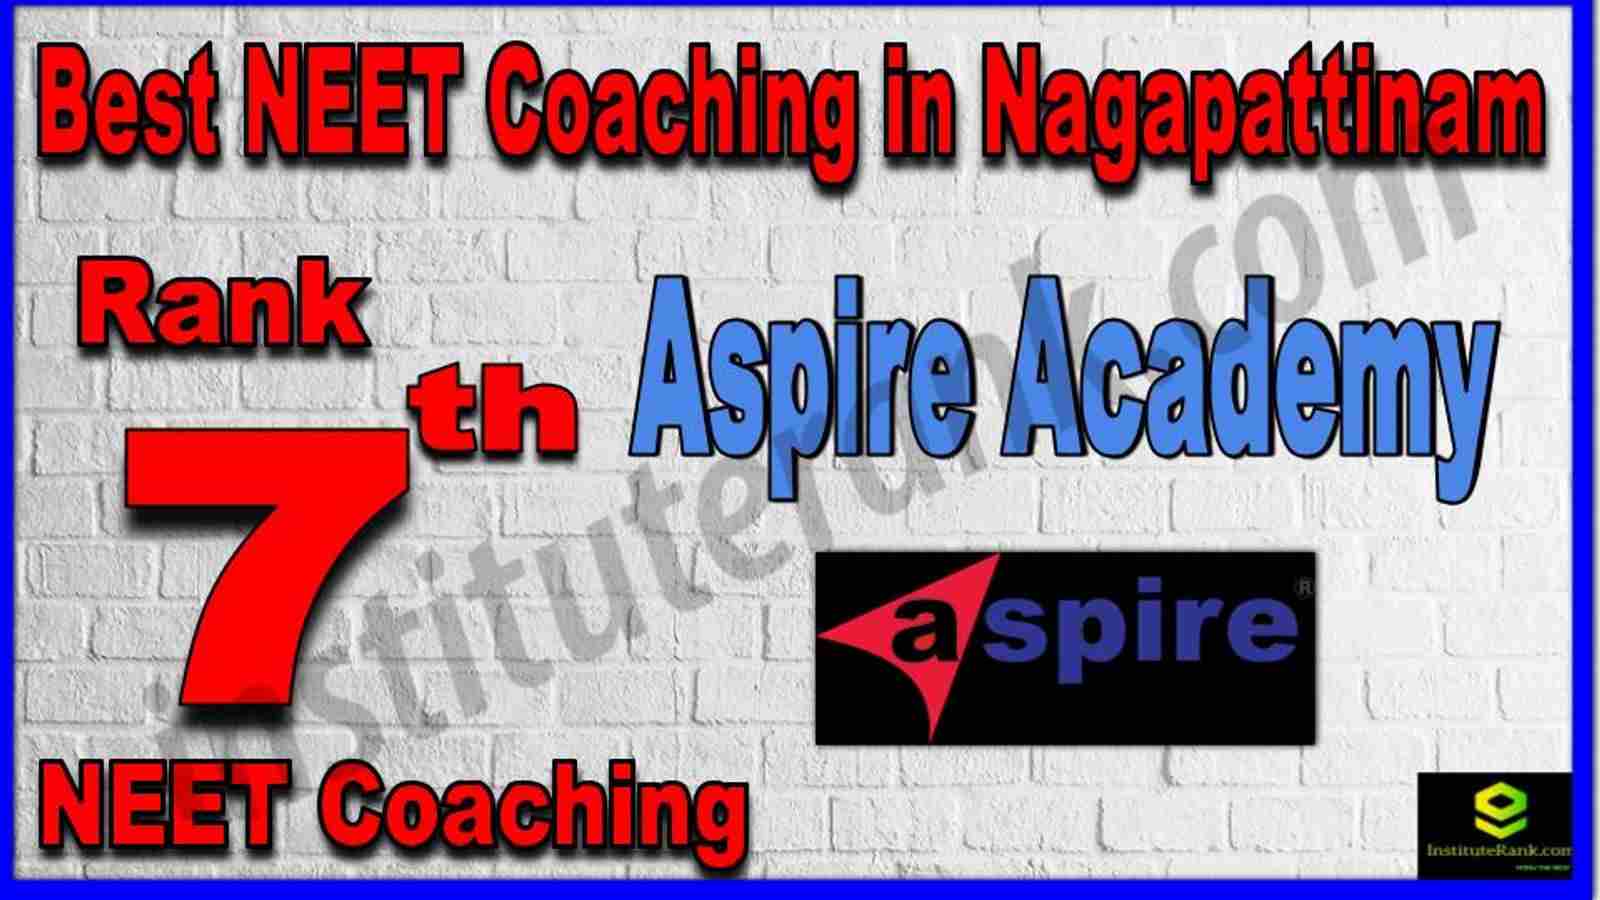 Rank 7th Best NEET Coaching in Nagapattinam